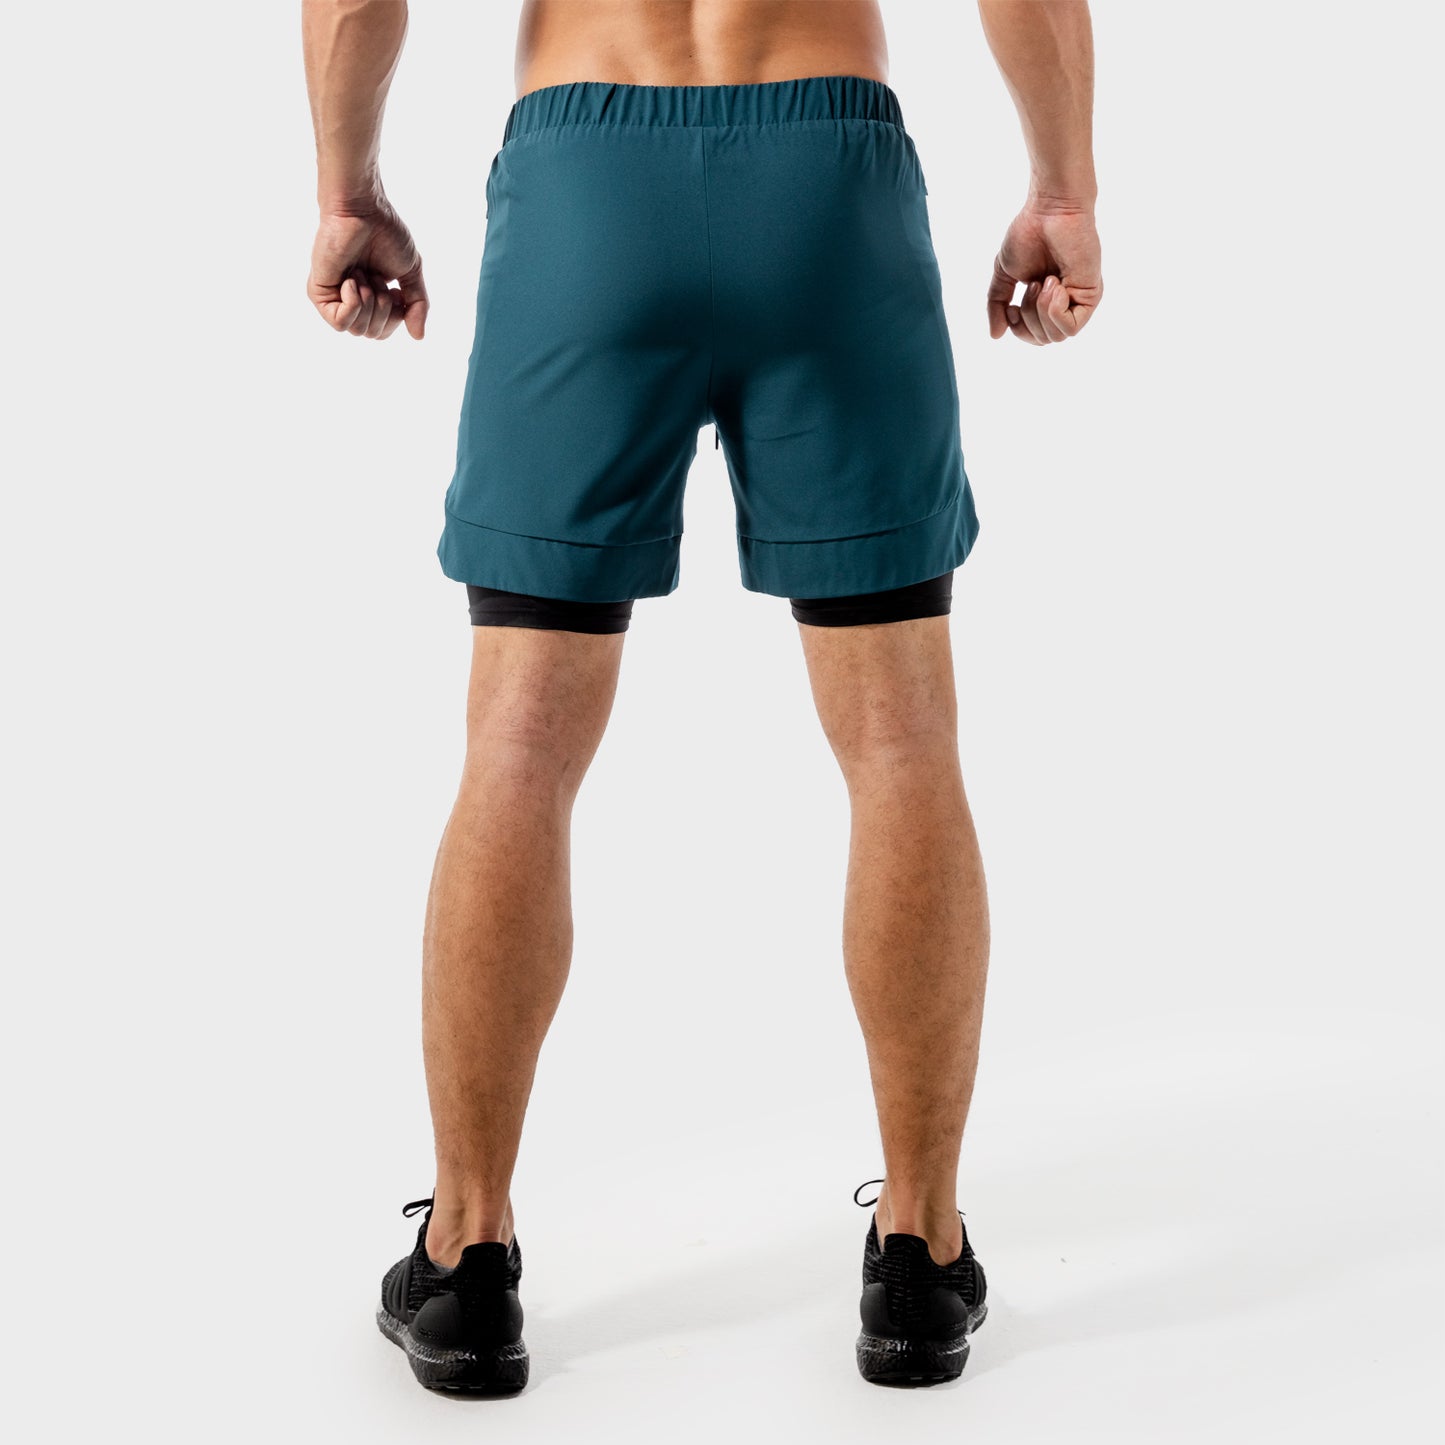 DZ, Limitless 2-in-1 Shorts - Light Grey, Gym Shorts Men